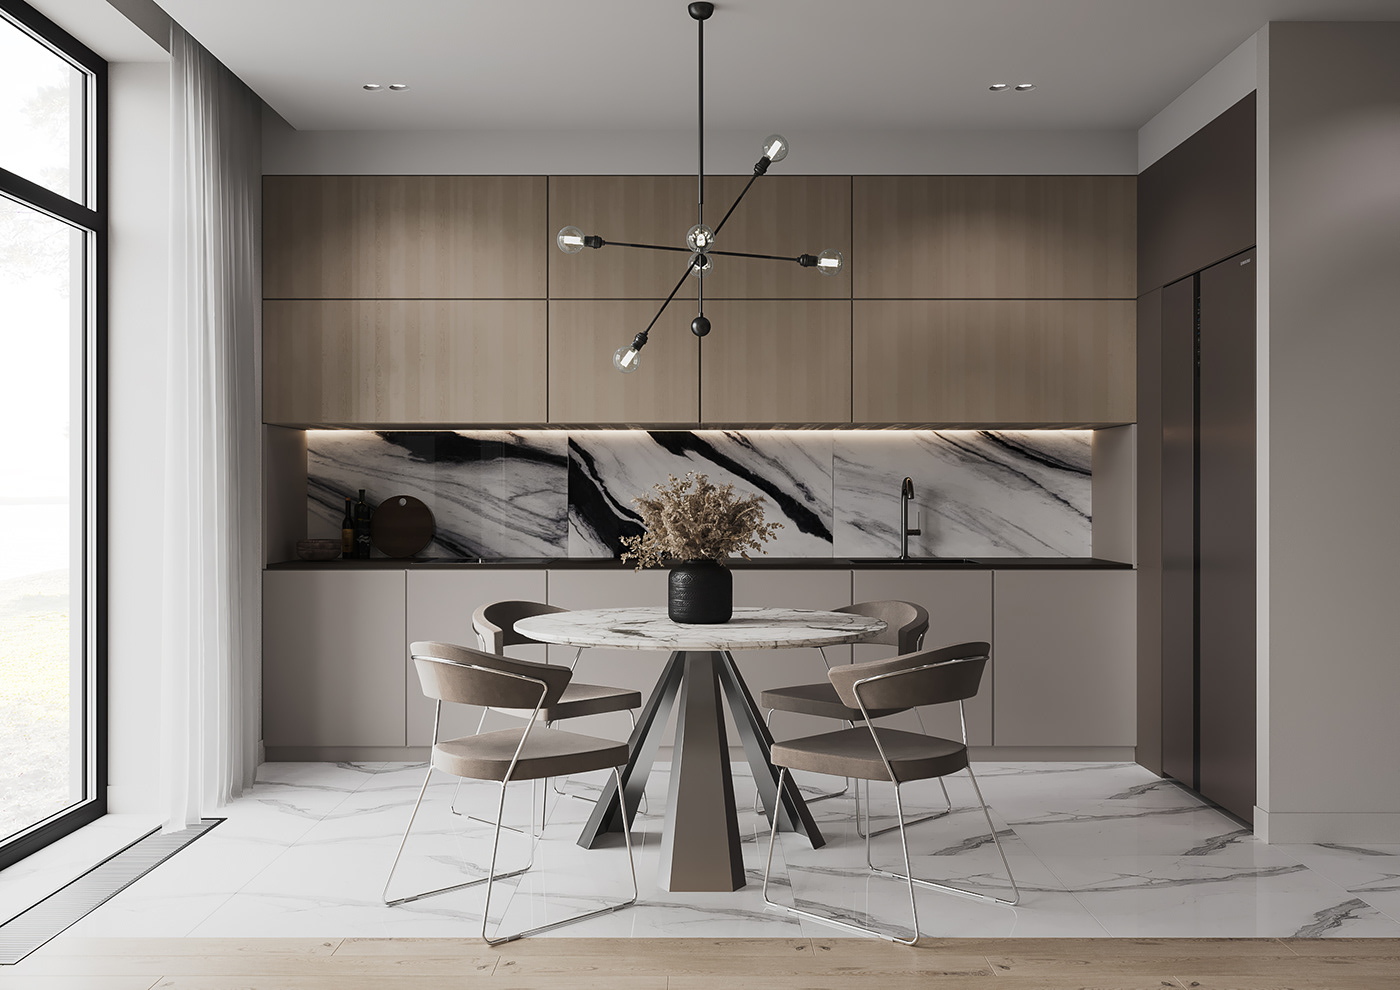 #3D #coronarender #kitchen #livingroom #3dsmax archviz design interior design  Render visualization